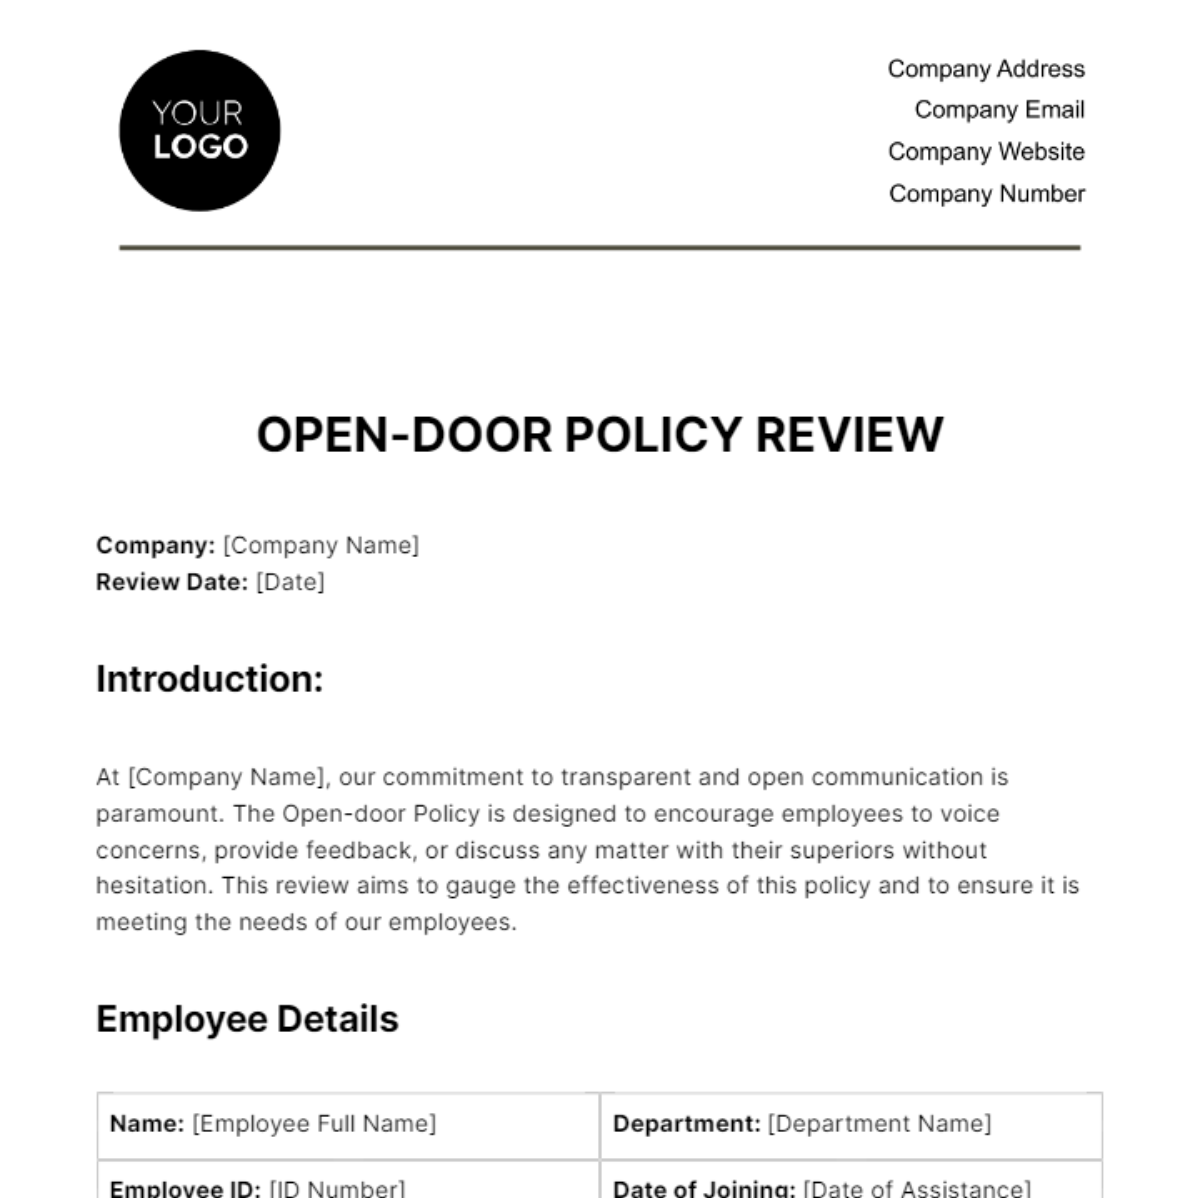 Free Open-door Policy Review HR Template